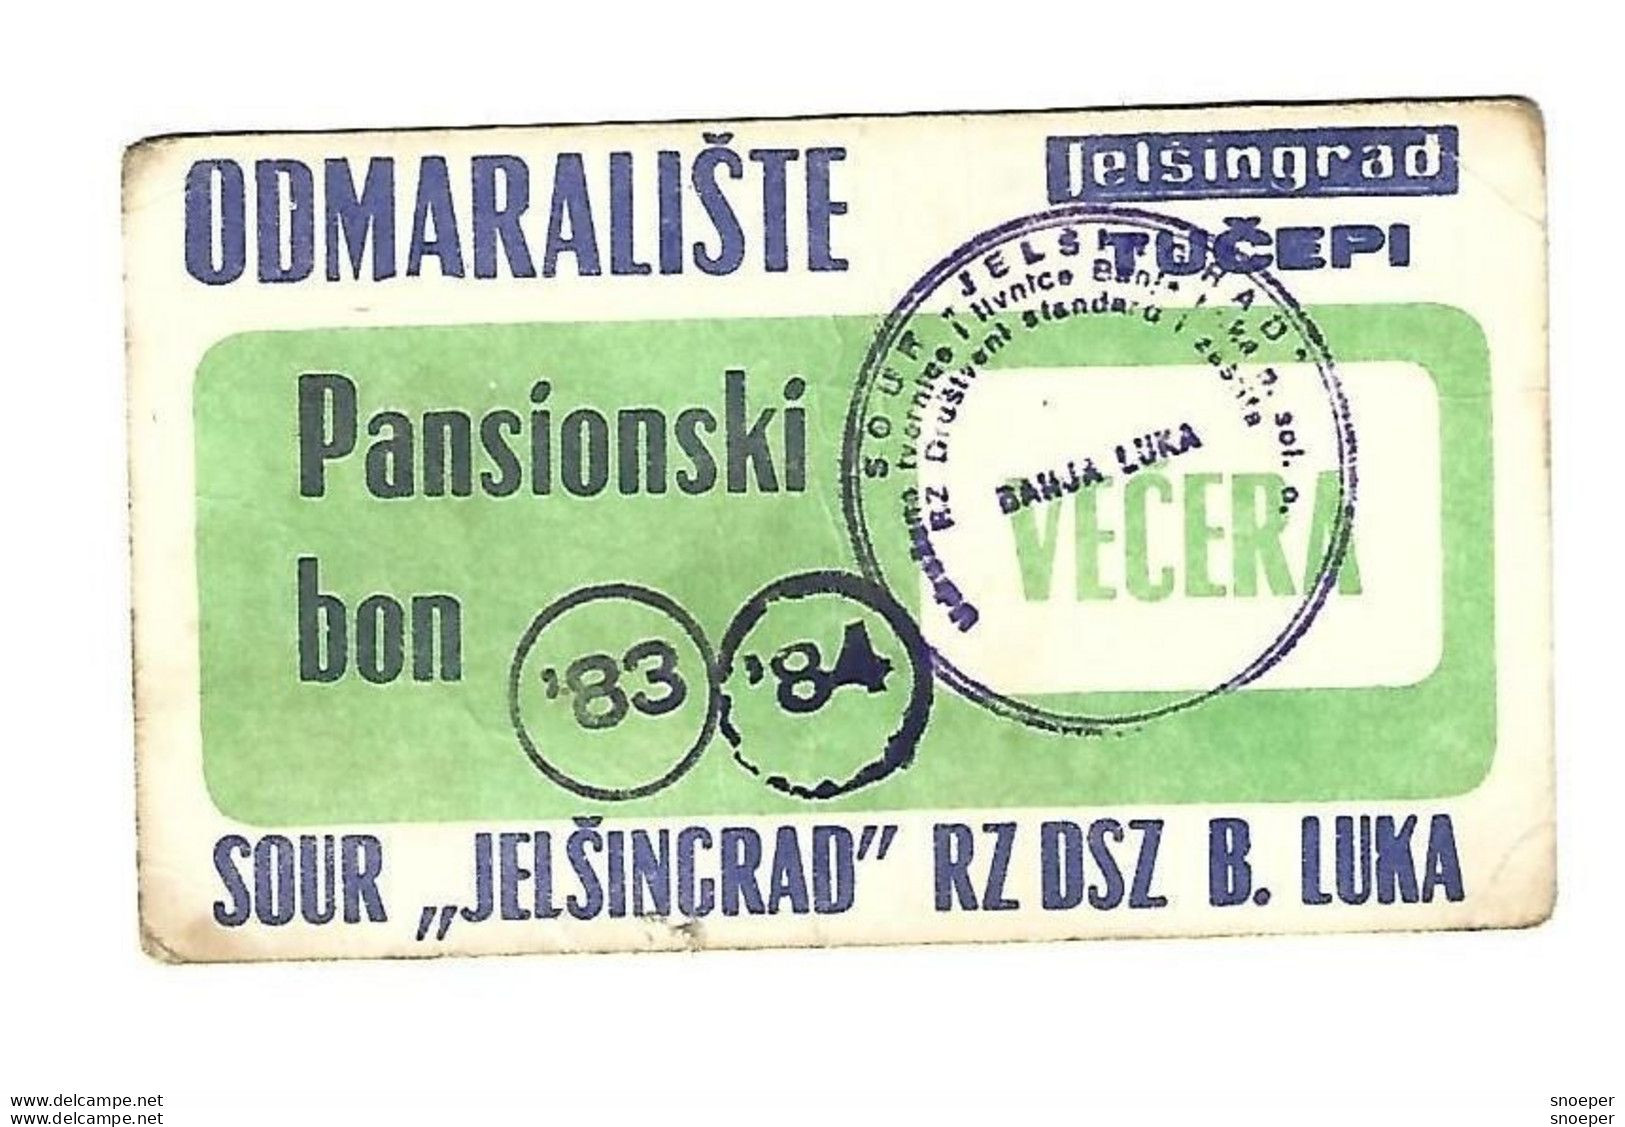 *croatia Tucepi Vacation Center Jelsingrad Diner Voucher  1983-84   2 Stamps Round  C35 - Croatia